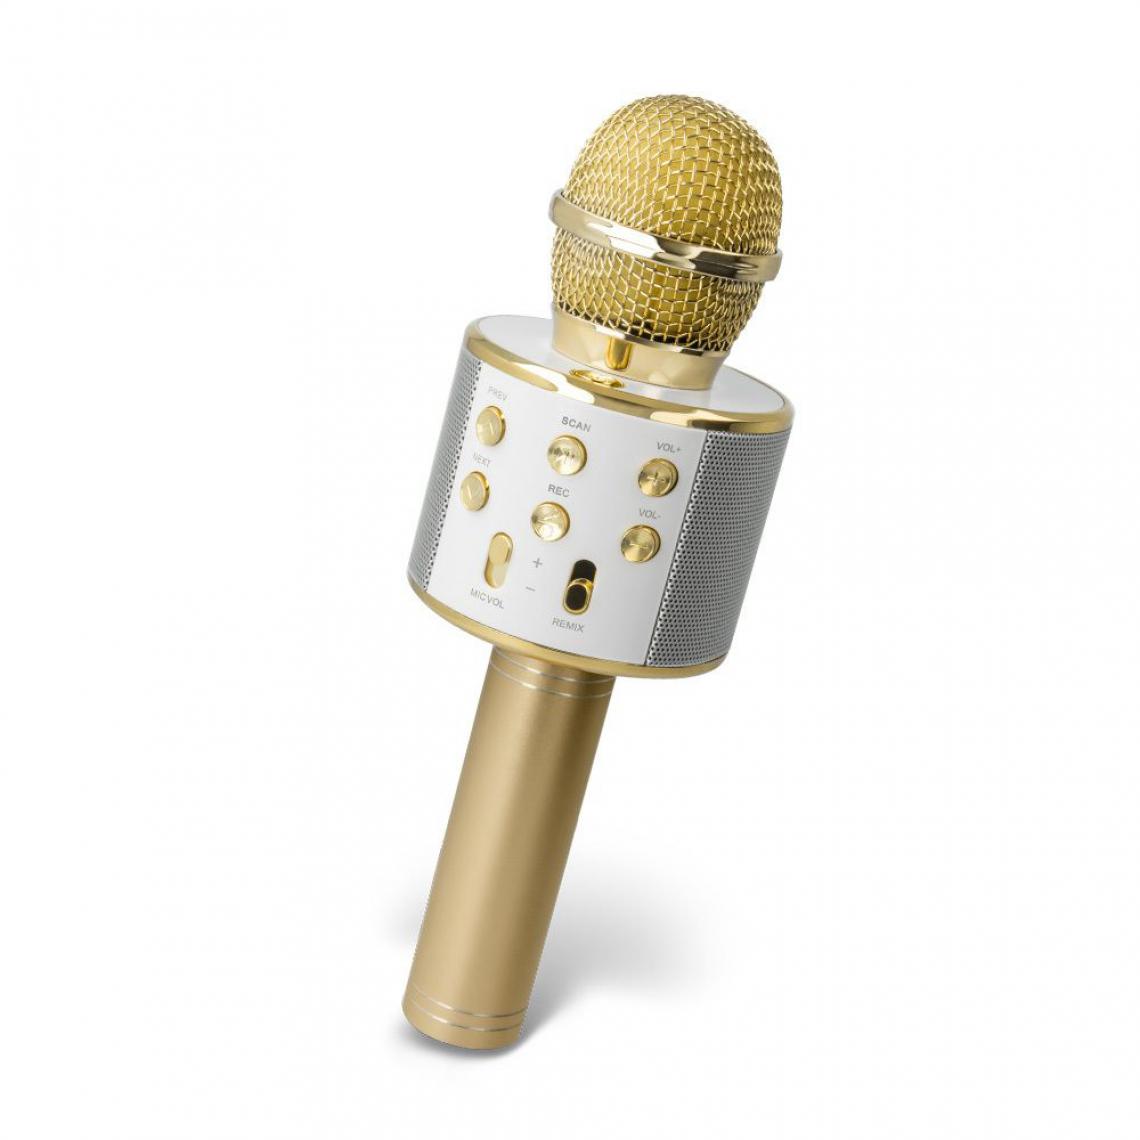 Ozzzo - Microphone Karaoke bluetooth haut parleur ozzzo Gold Or pour Xiaomi Mi4 - Autres accessoires smartphone